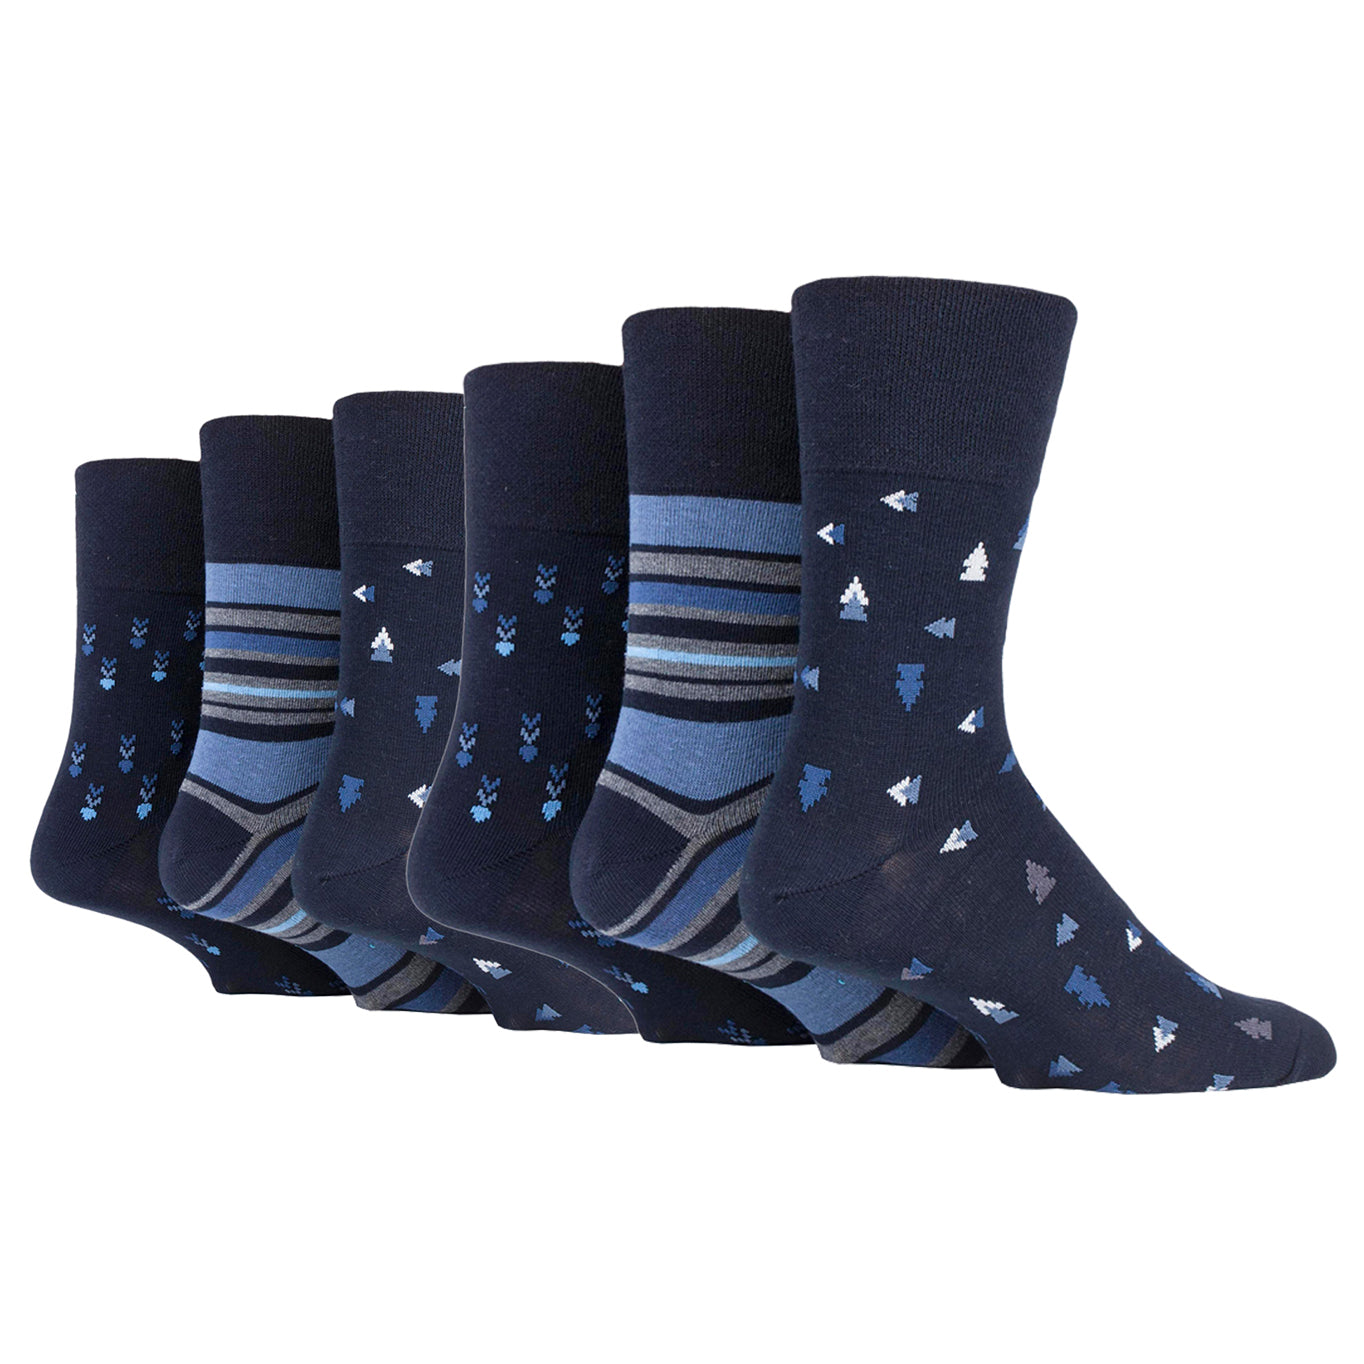 6 Pairs Men's Gentle Grip Cotton Socks Dimensional Dart Navy